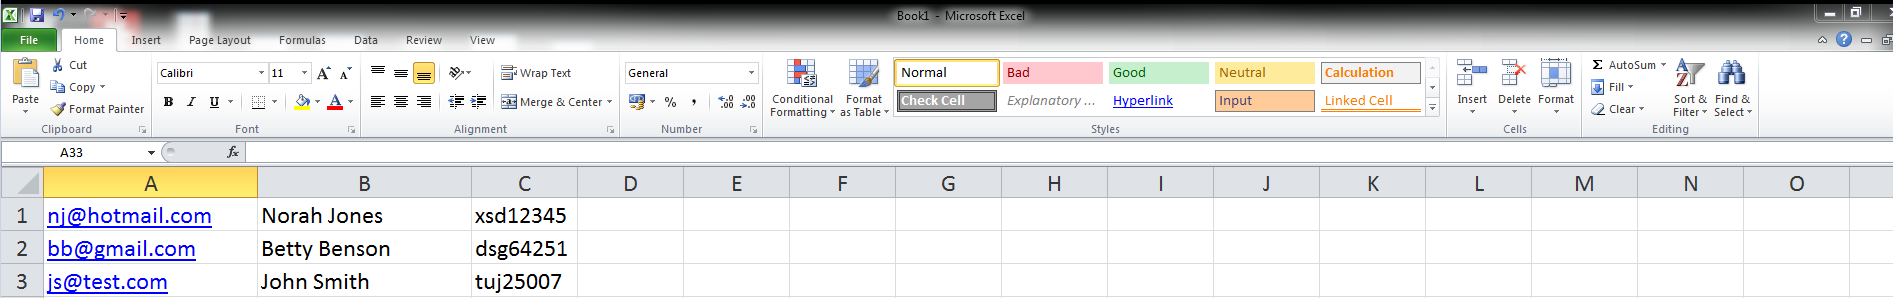 Exempel på Microsoft Excel-kalkylblad